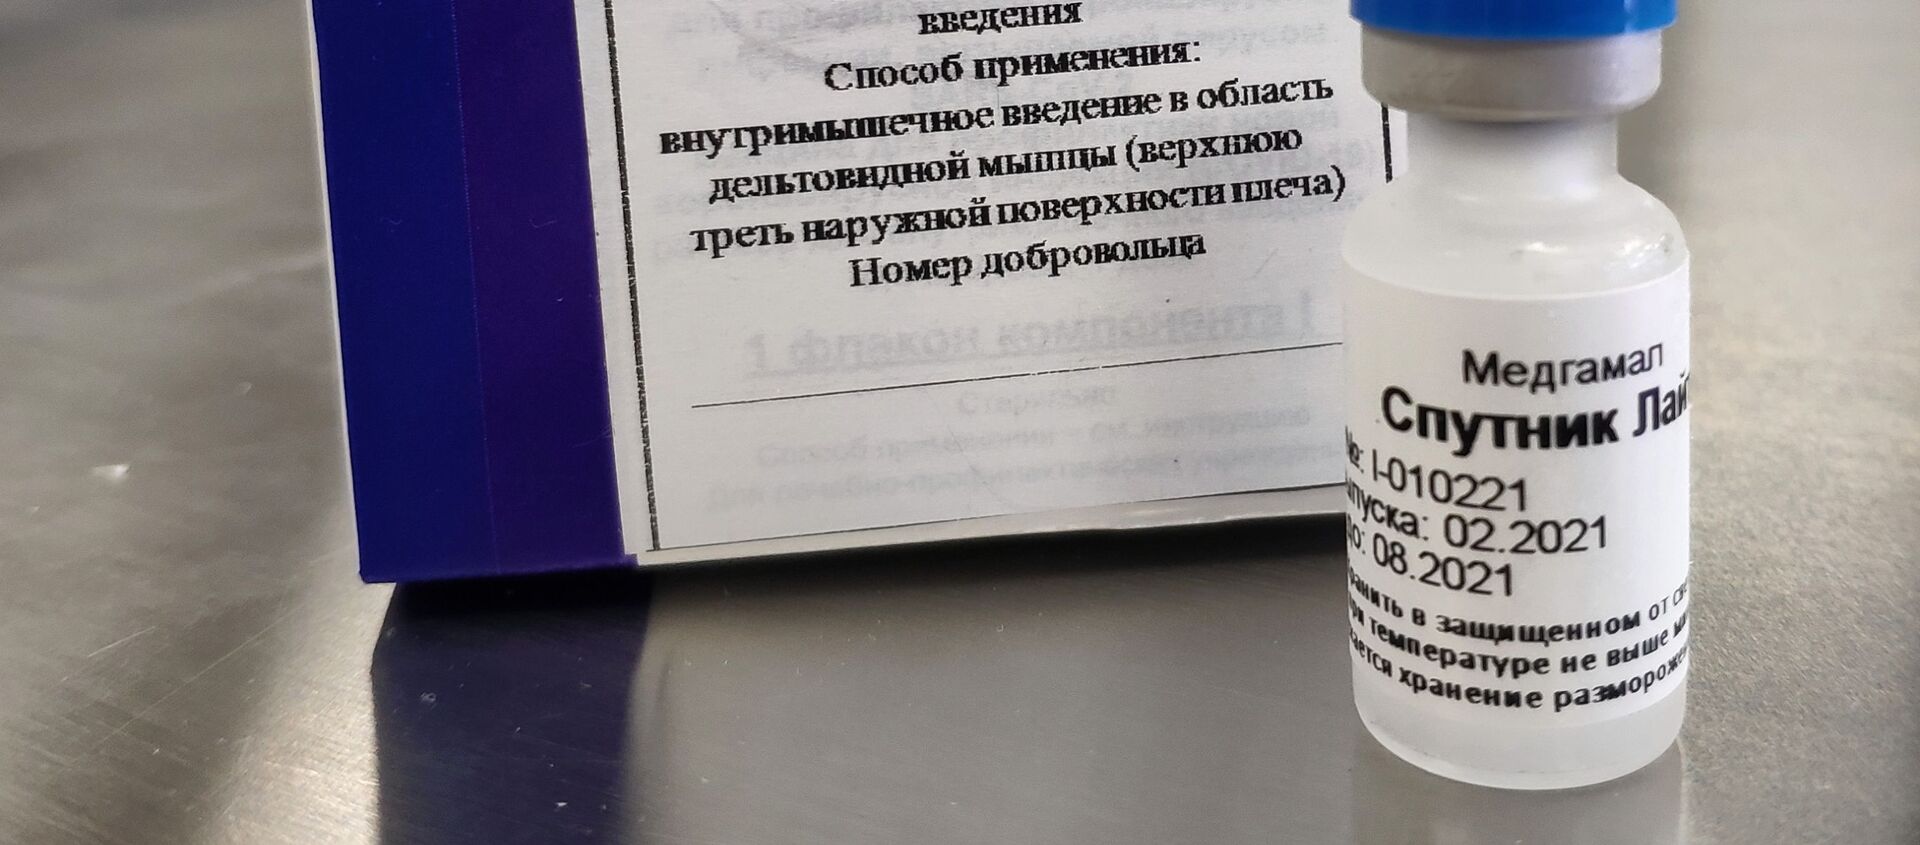 Упаковка однокомпонентной вакцины от COVID-19 Спутник Лайт - 俄羅斯衛星通訊社, 1920, 06.05.2021